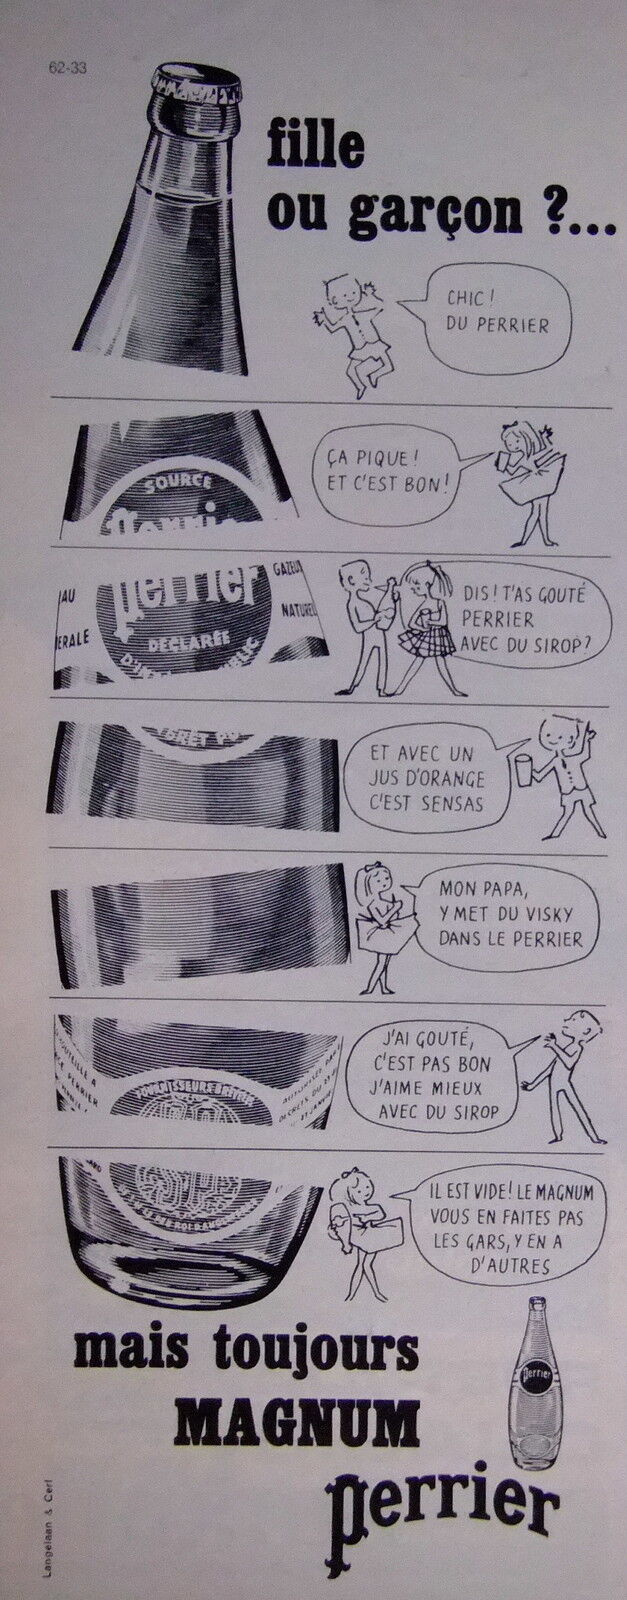 1961 PERRIER MAGNUM GIRL OR BOY PRESS ADVERTISEMENT - COMIC